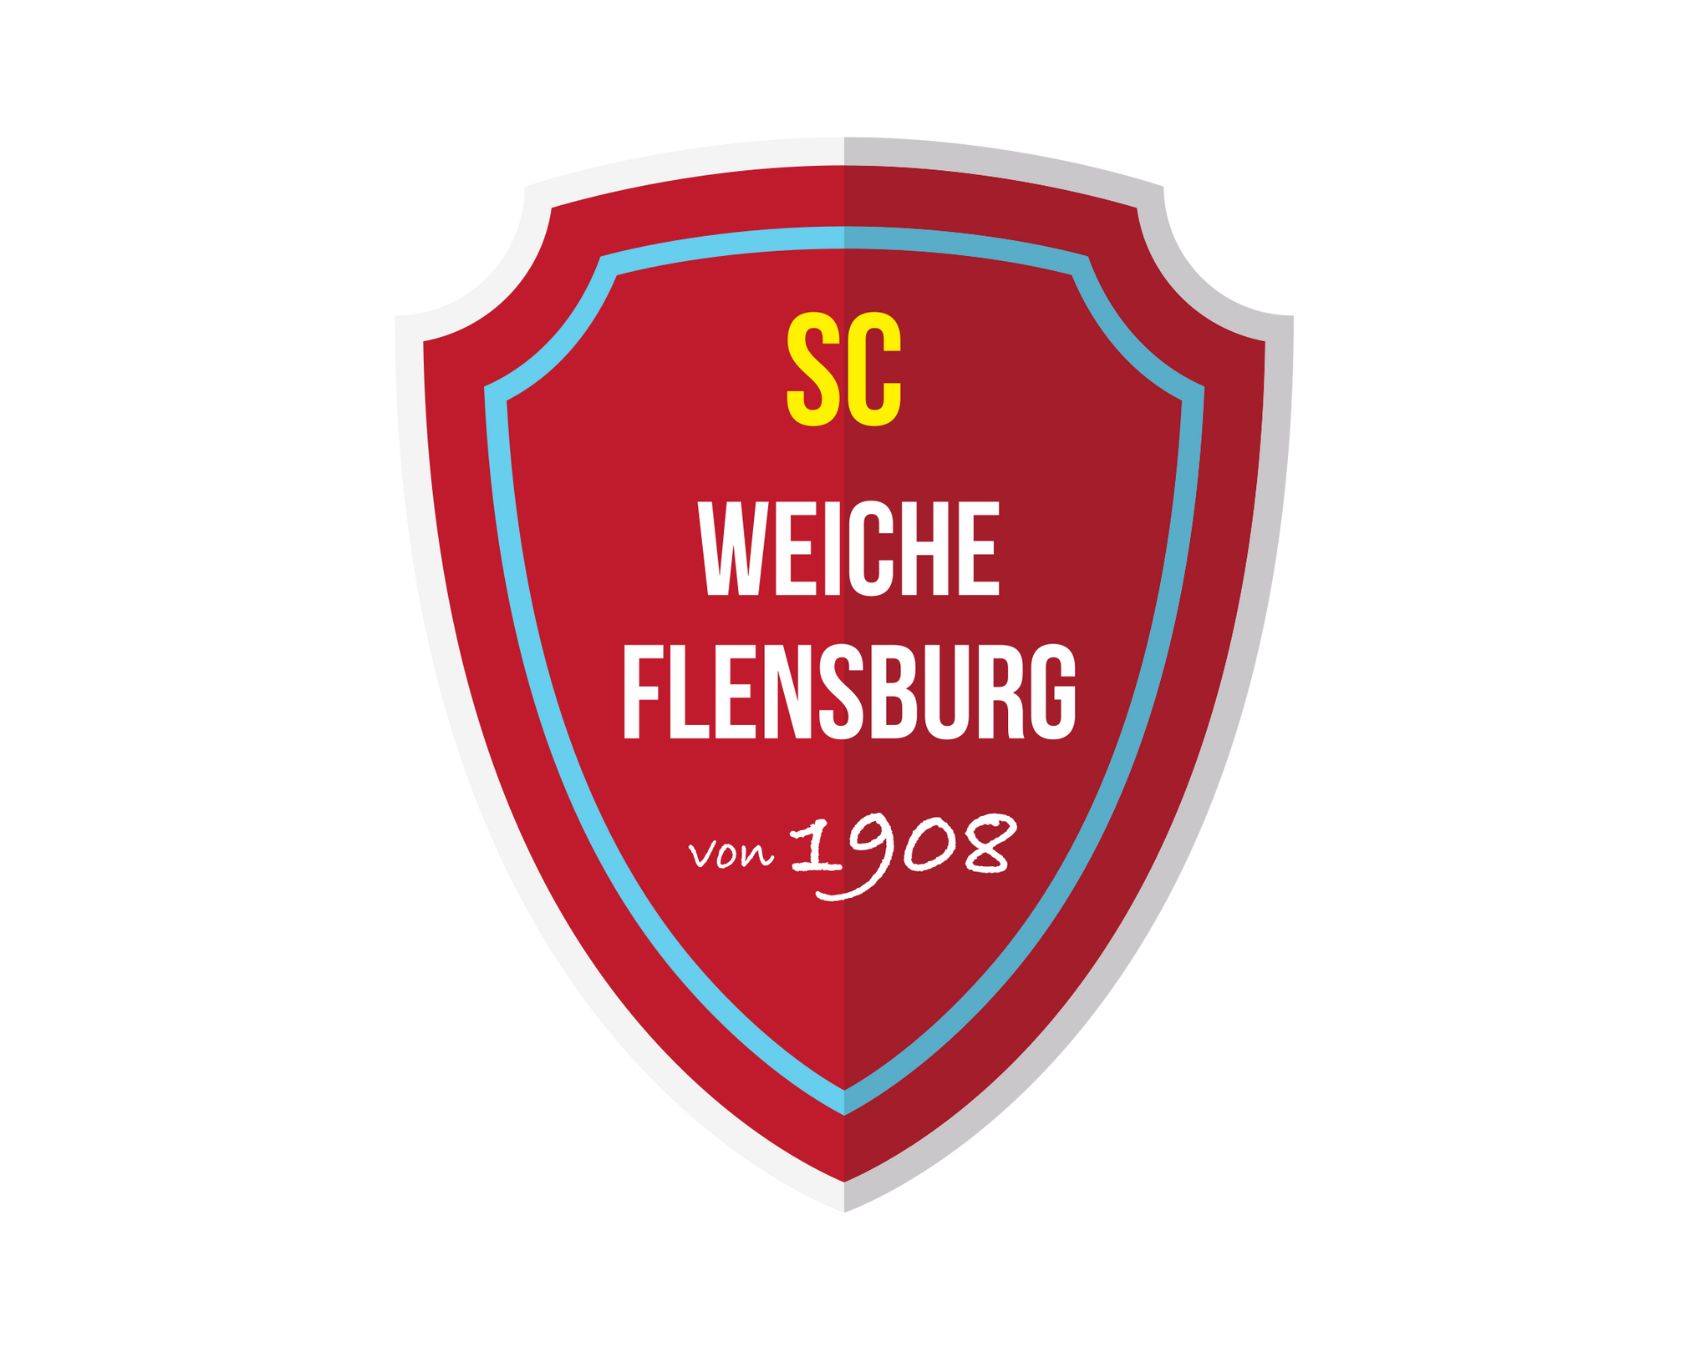 sc-weiche-flensburg-08-16-football-club-facts